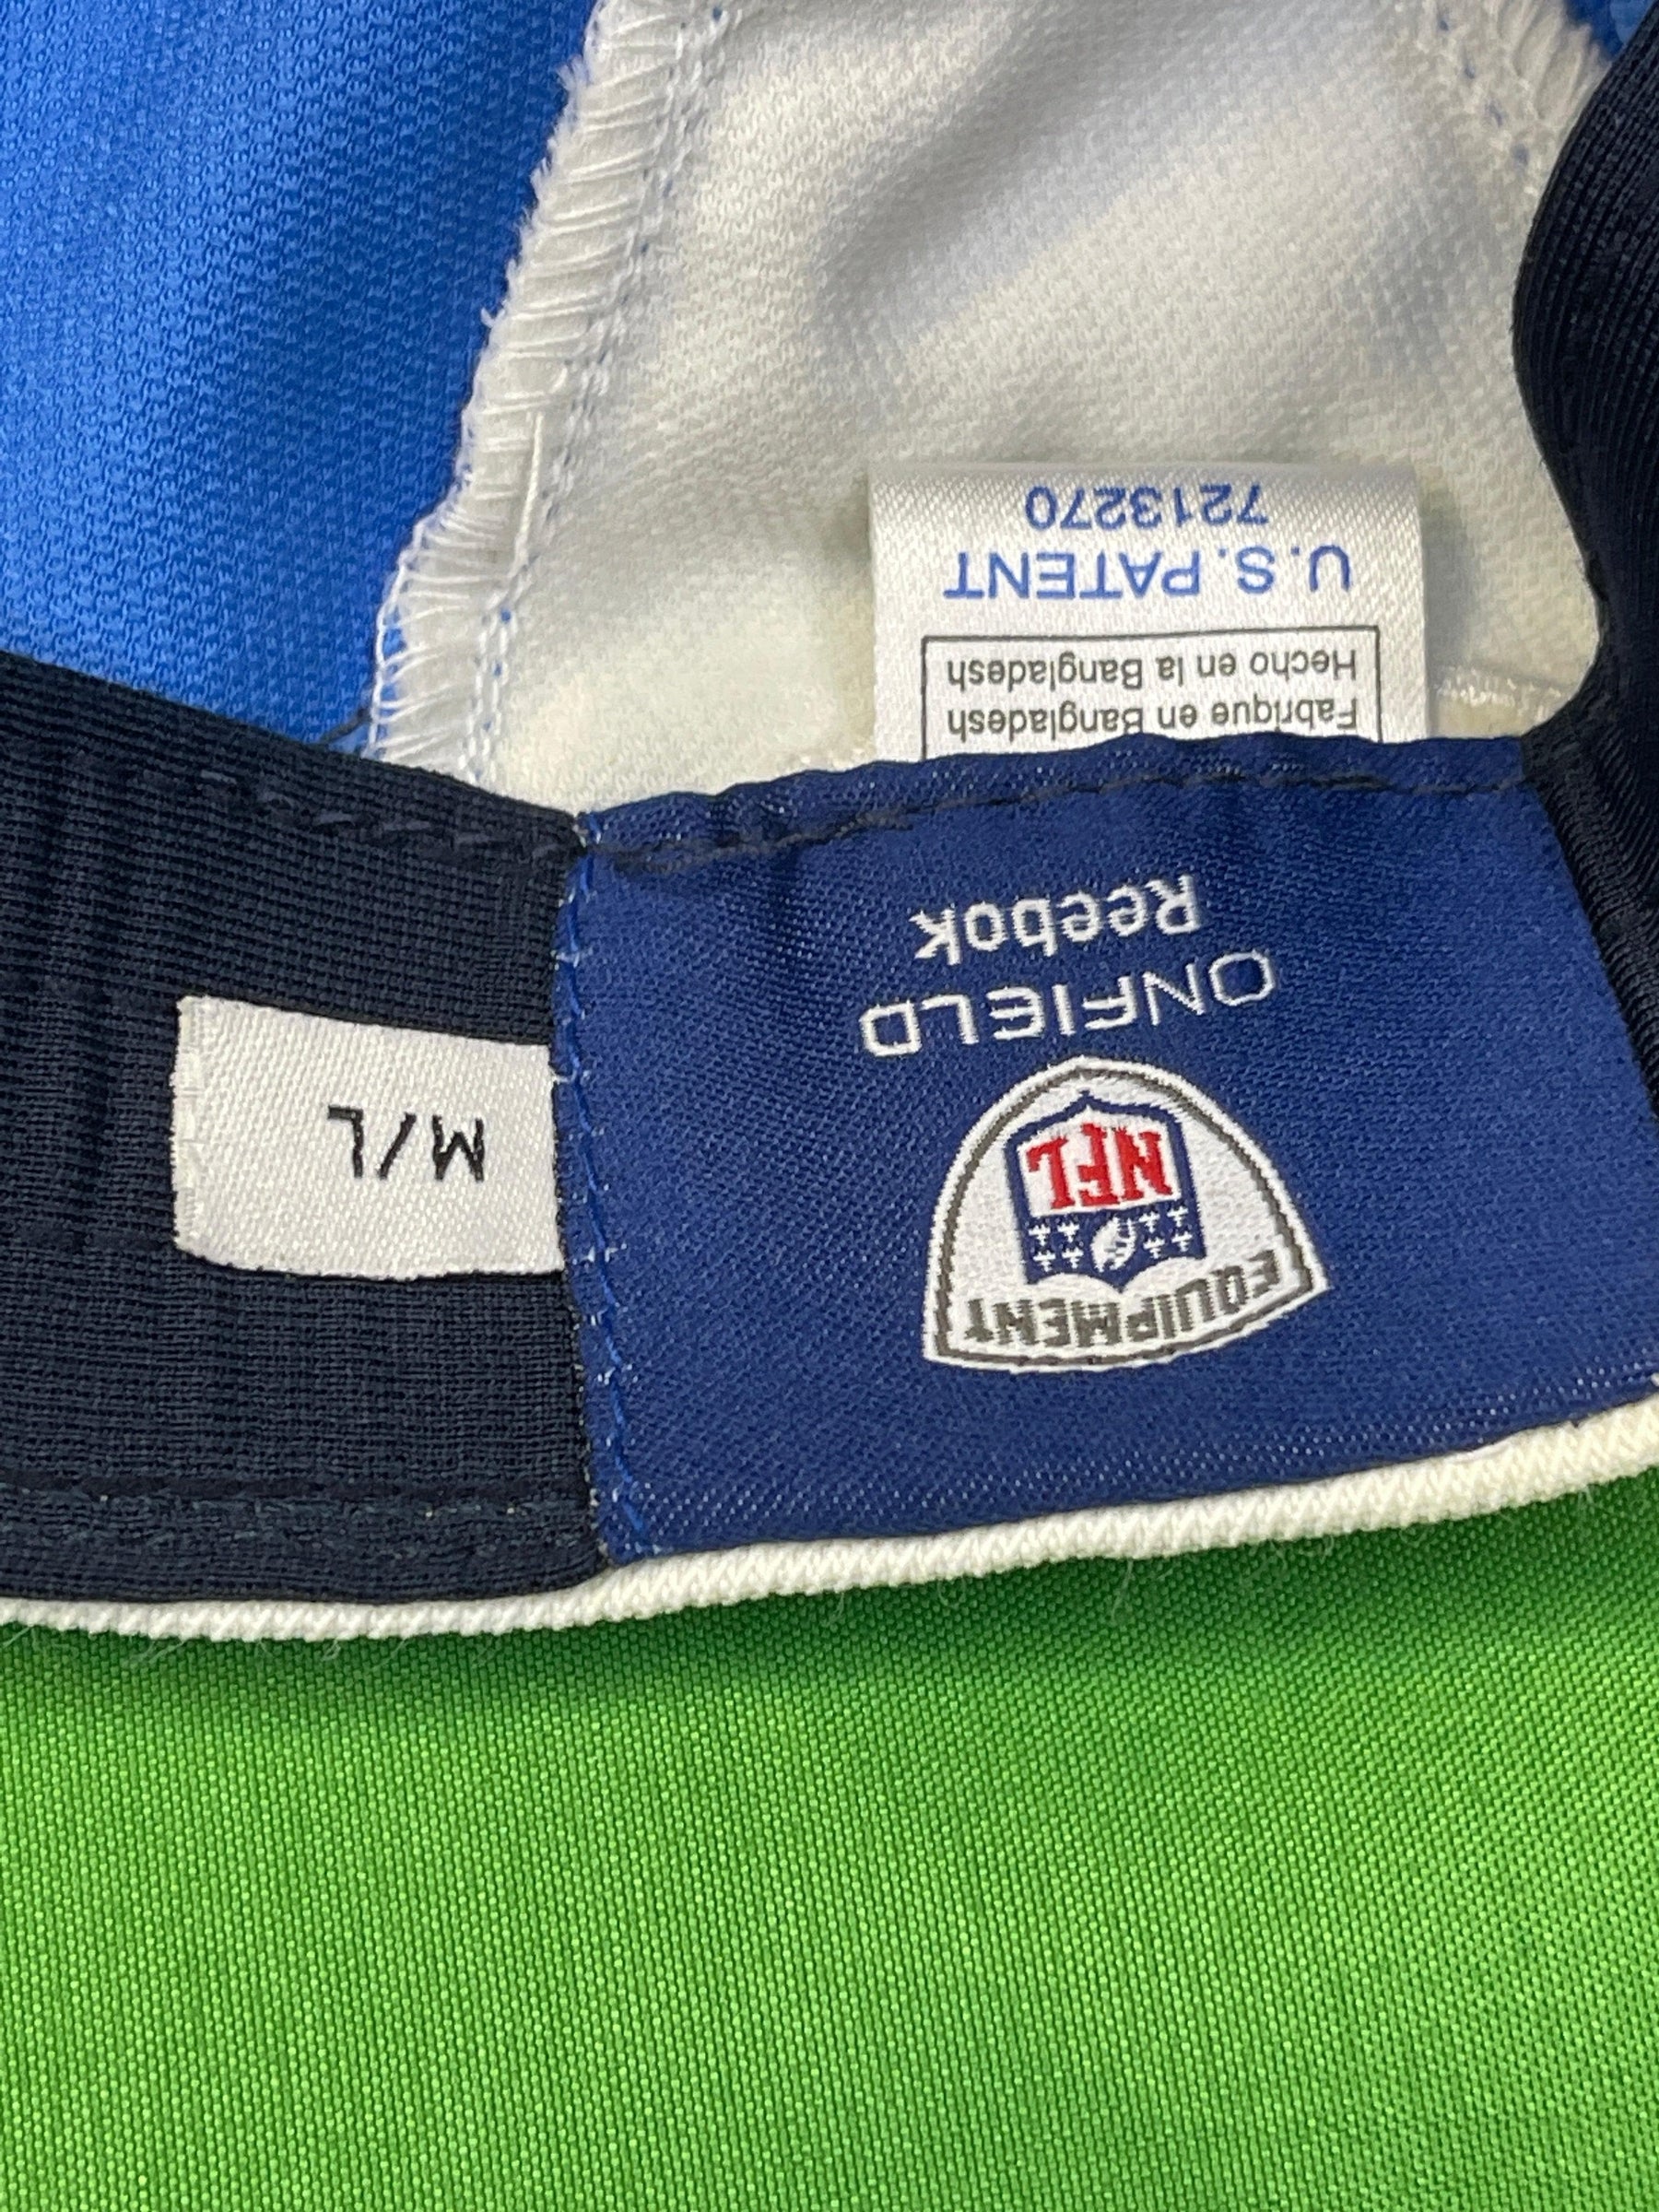 NFL Los Angeles Chargers Reebok Vintage Baseball Cap/Hat Medium/Large